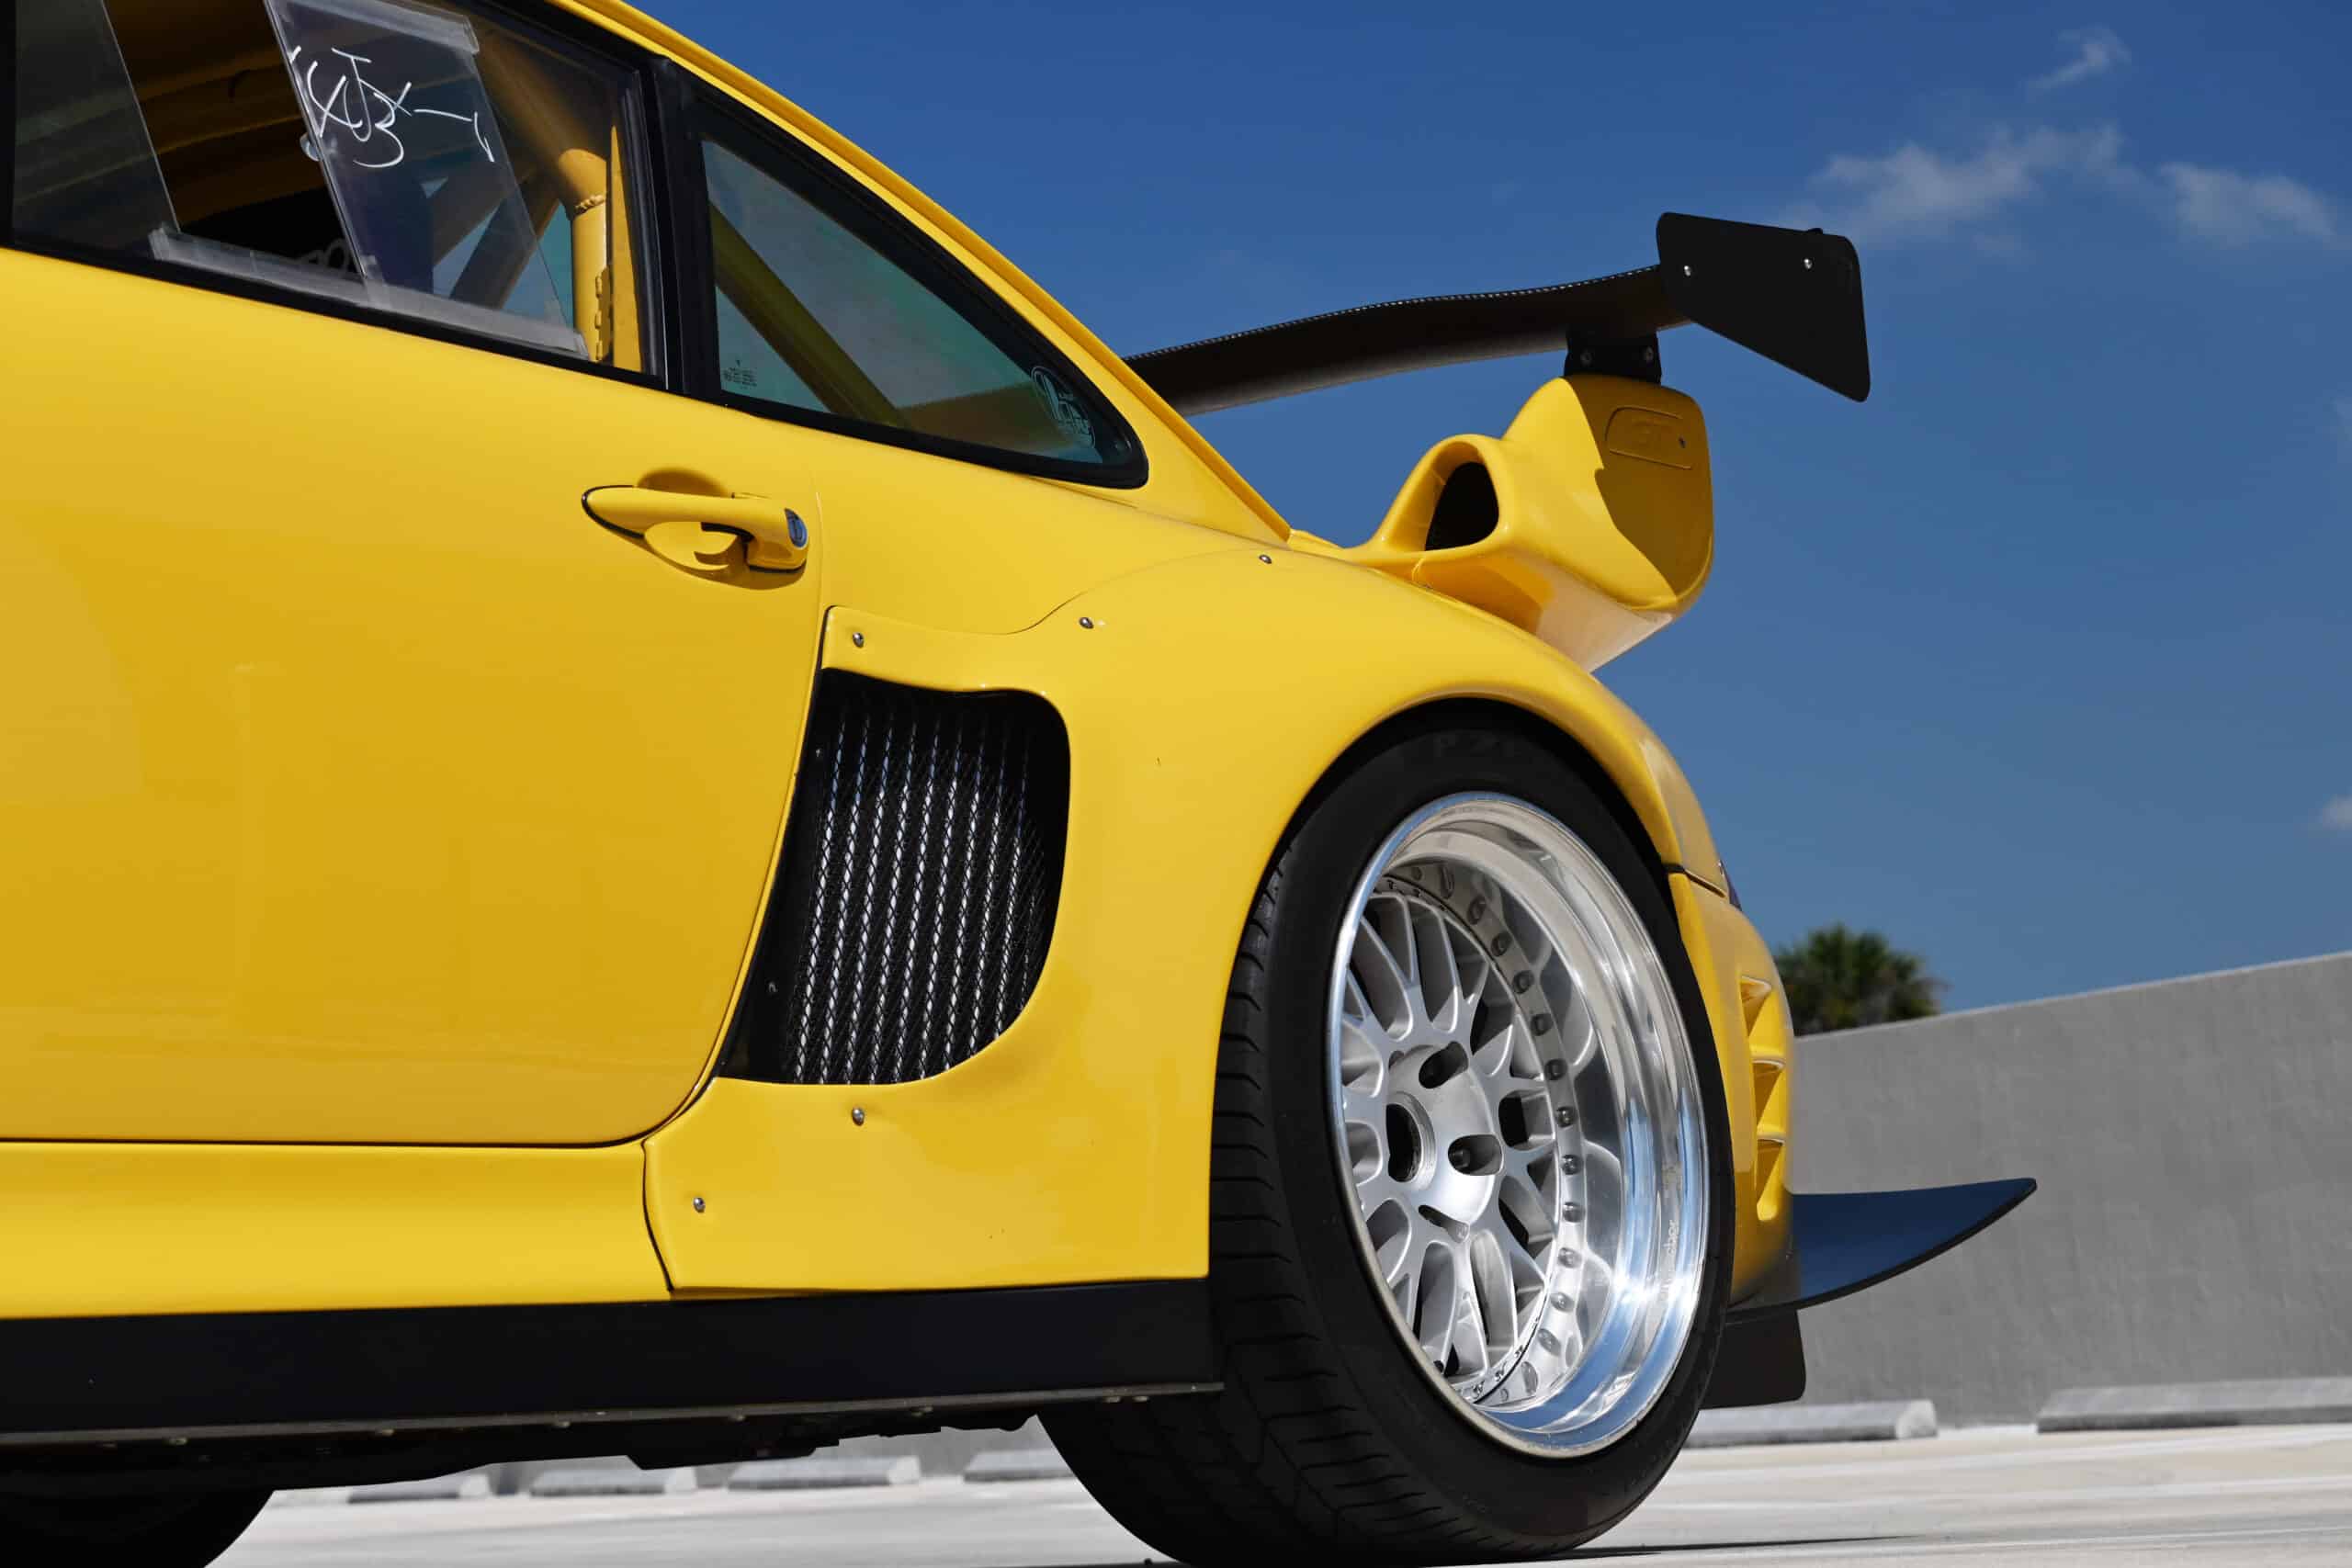 1996 Porsche 911 Turbo GT2 Spec /War ready/ Street Legal GT2 Evo spec build/ 600 hp 2600lb RWD / Factory Speed Yellow Sunroof delete / approx. 35k miles / accident free